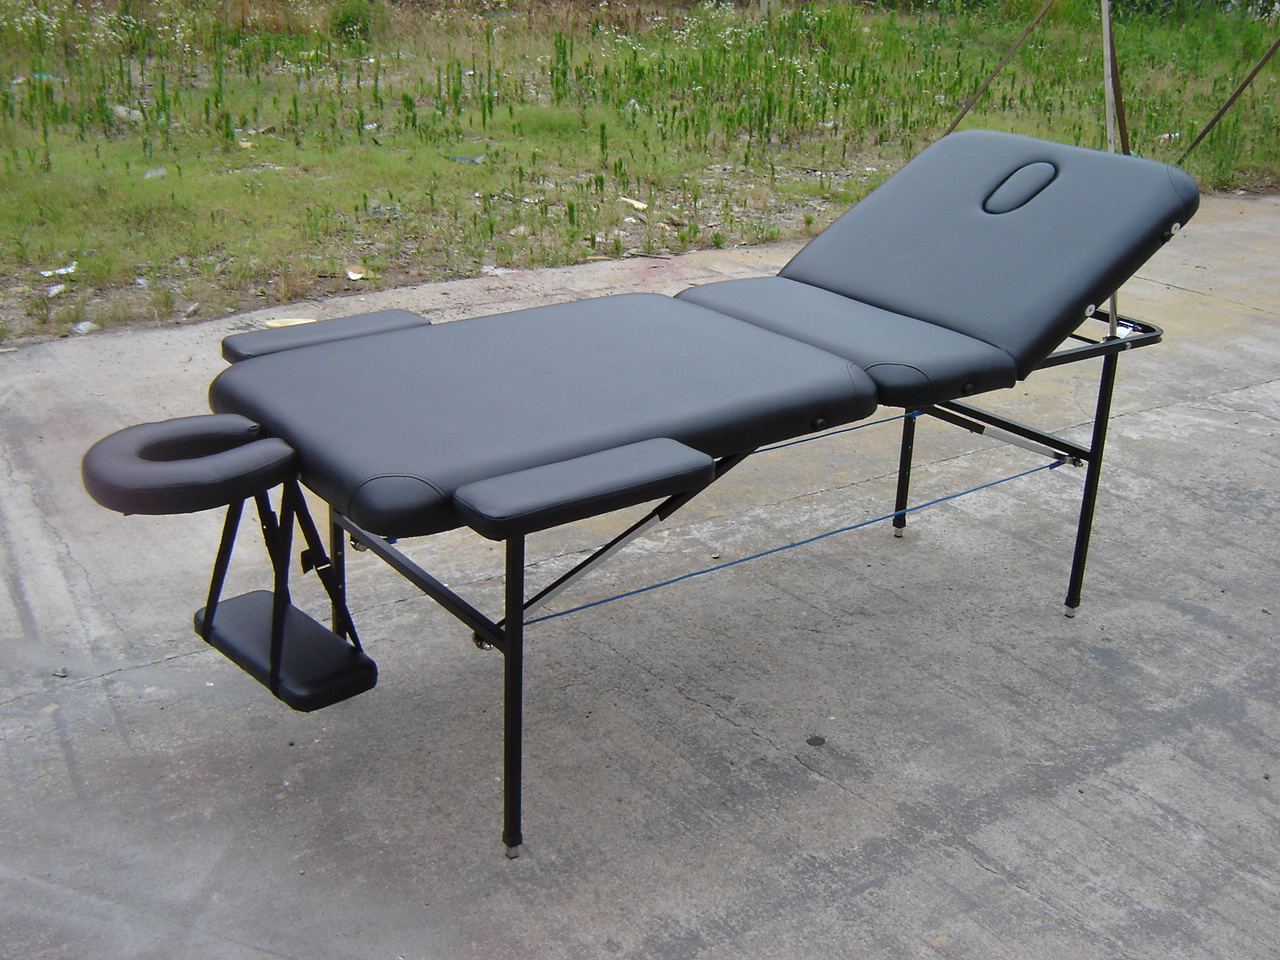 MT003A portable metal massage table